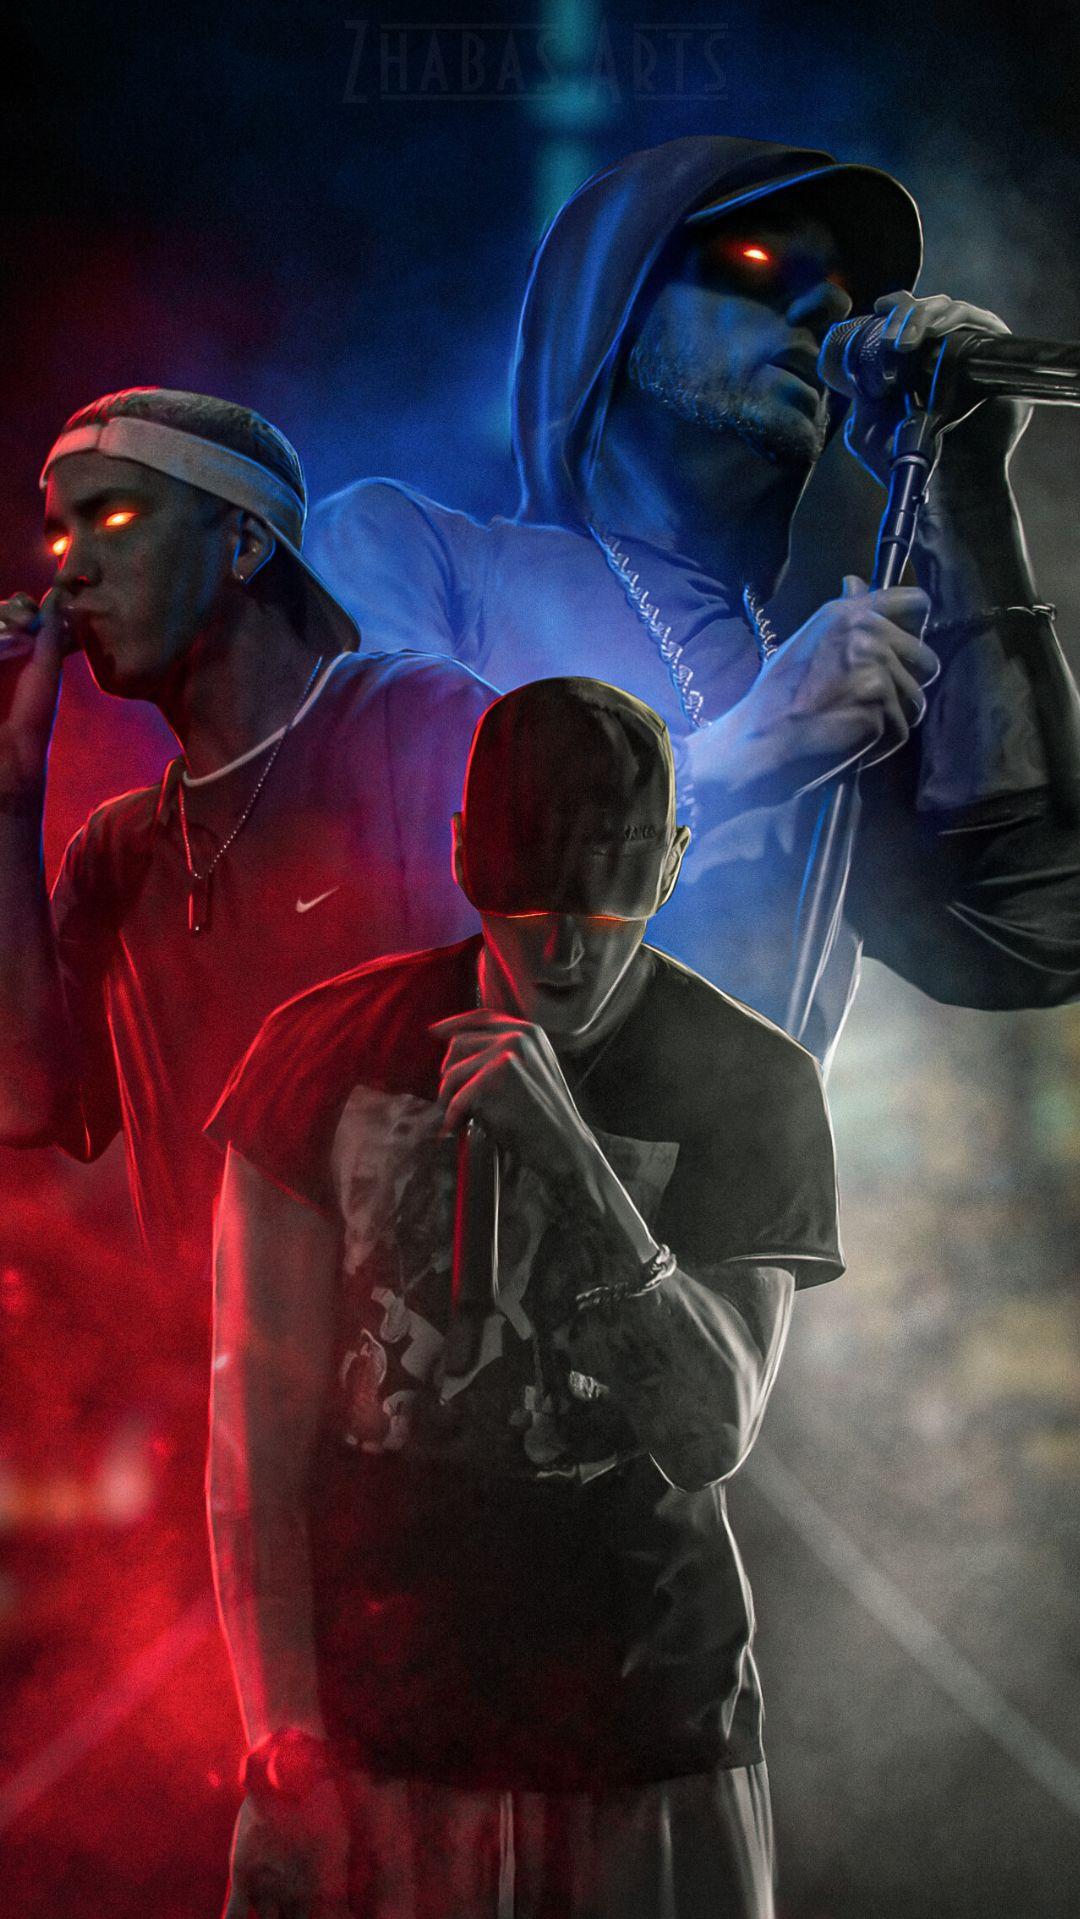 Eminem Wallpapers Top Best Eminem Wallpapers Download